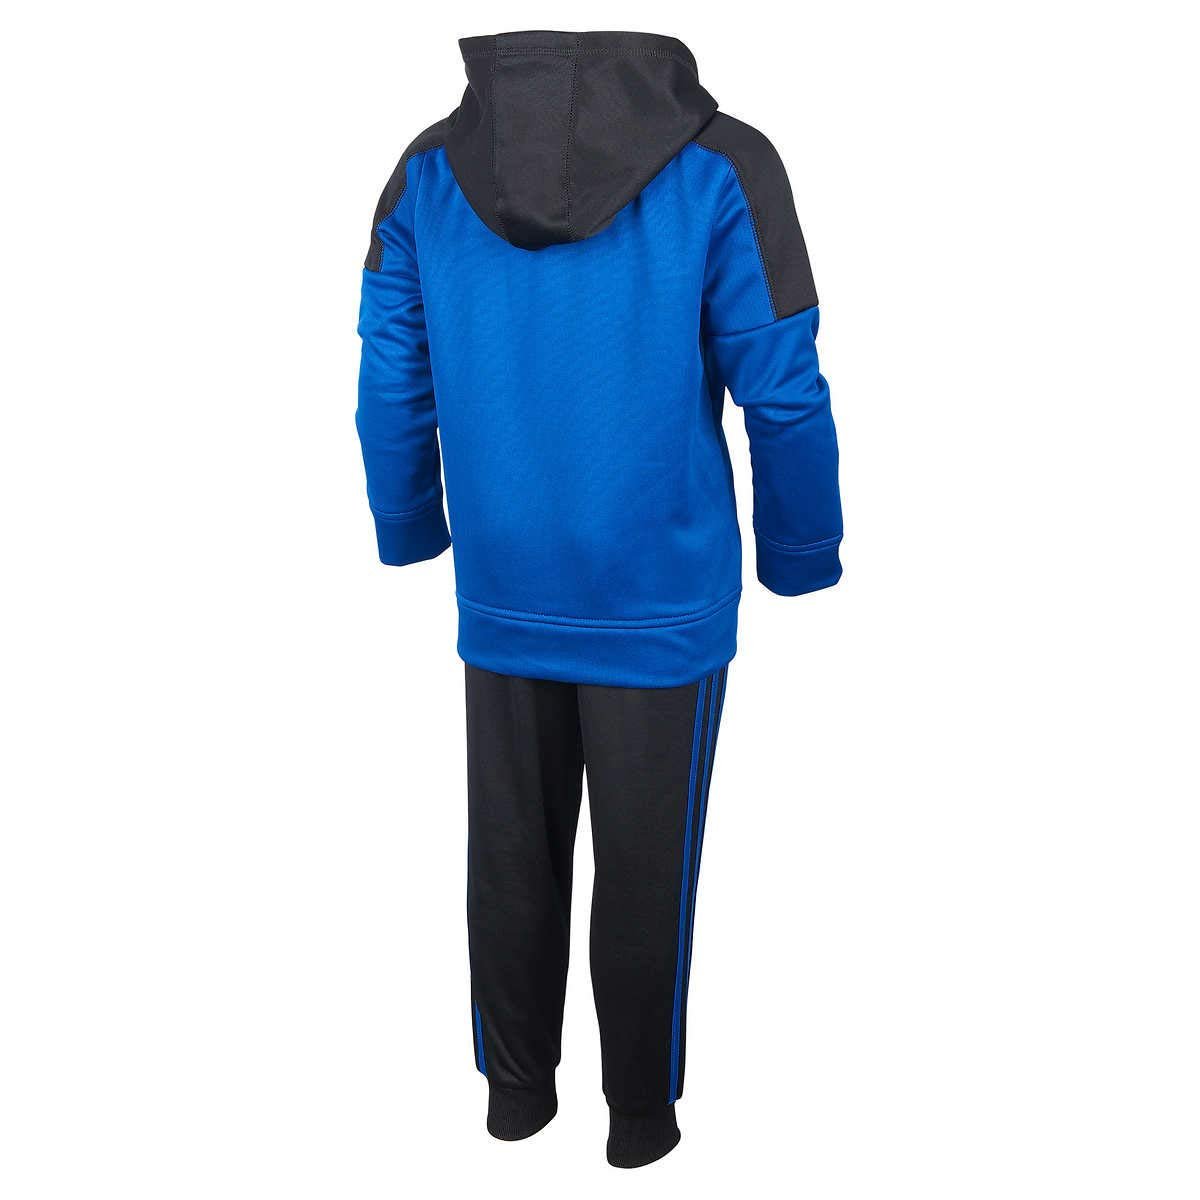 adidas Boys 2 Piece Fleece Lined Active Set (Royal Blue/Black, 2T) - image 2 of 2